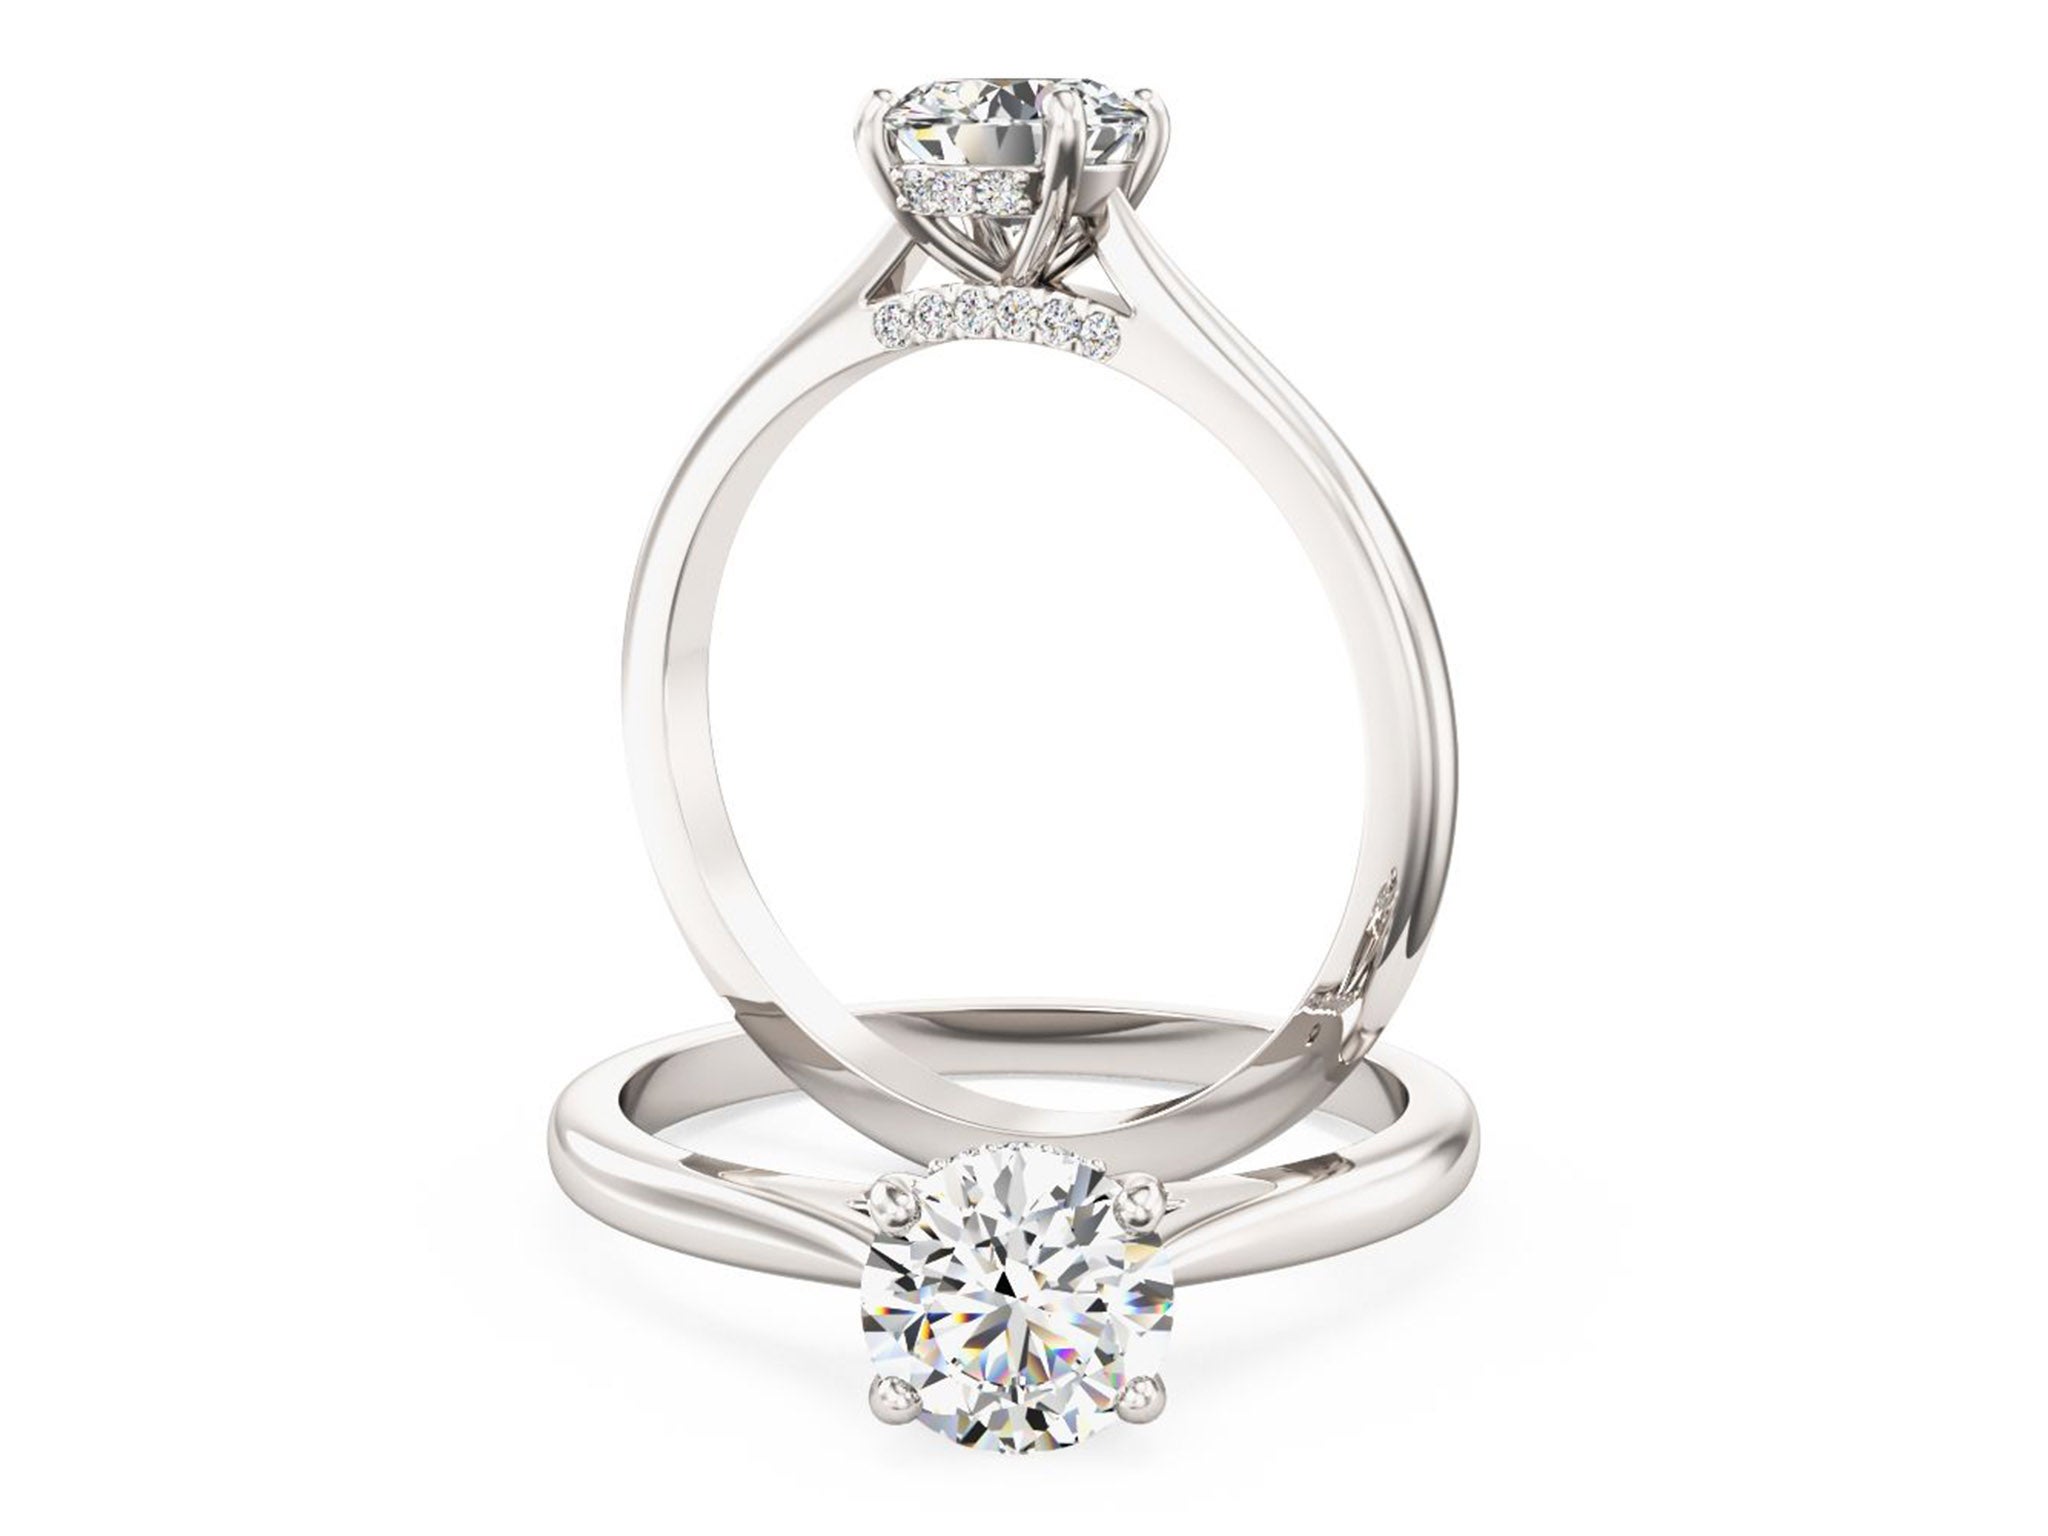 Royal Family Engagement Rings - Meghan Markle Engagement Ring